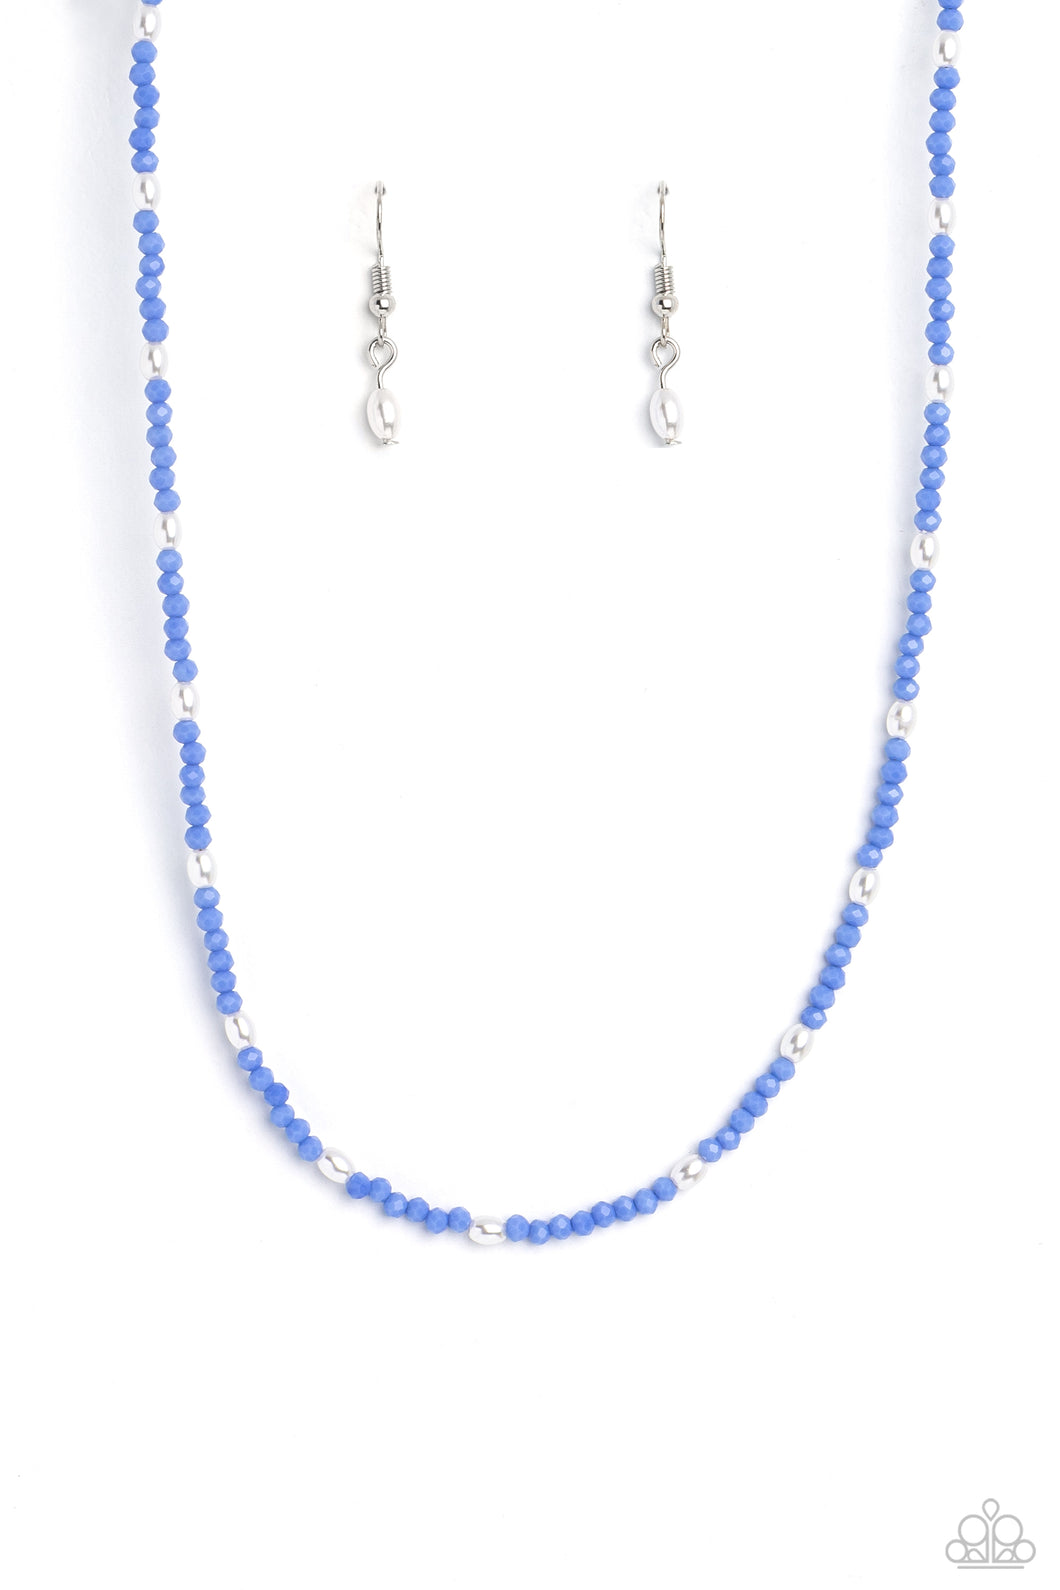 Beaded Blitz - Blue (Seed Bead) Necklace